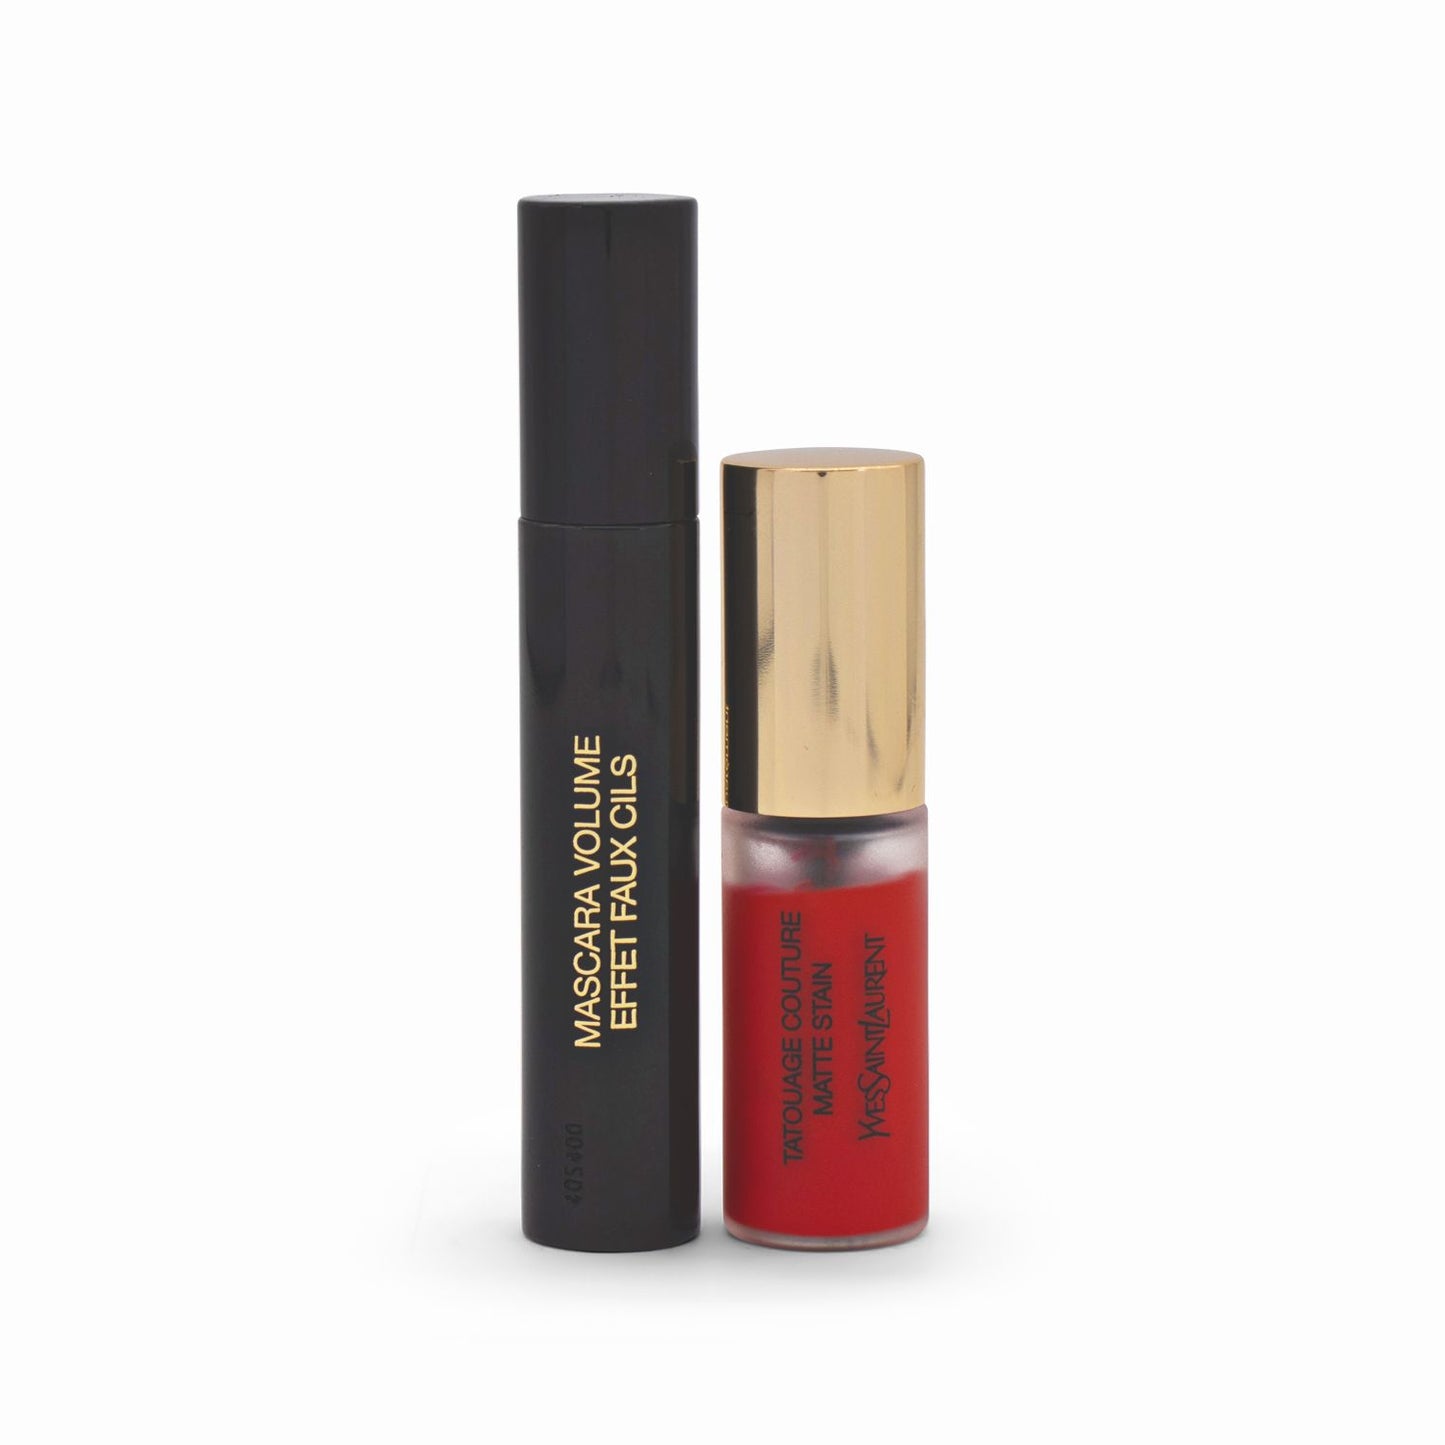 Yves Saint Laurent Mini Mascara and Lipstick Duo Set - Imperfect Box